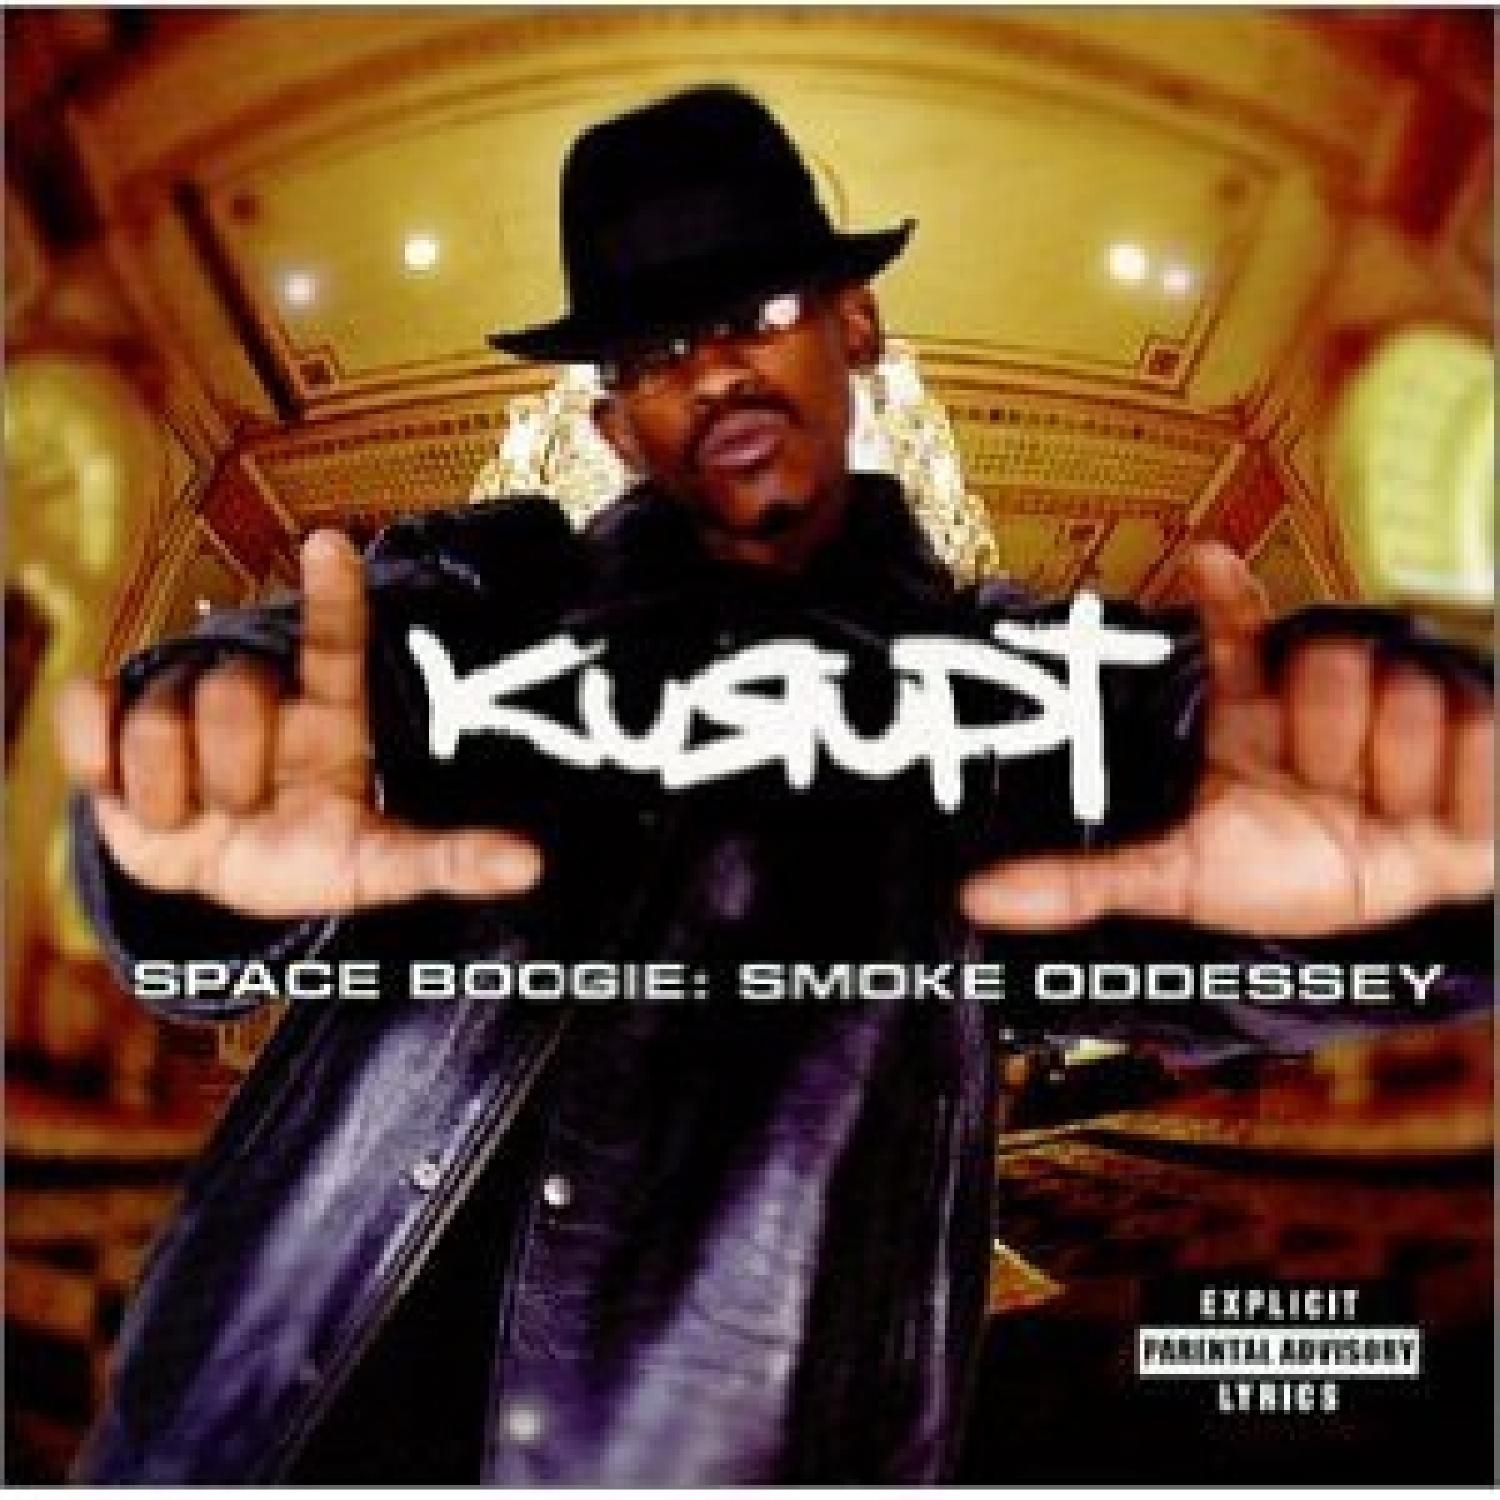 Space Boogie歌词 歌手Kurupt / Nate Dogg-专辑Space Boogie: Smoke Oddessey-单曲《Space Boogie》LRC歌词下载